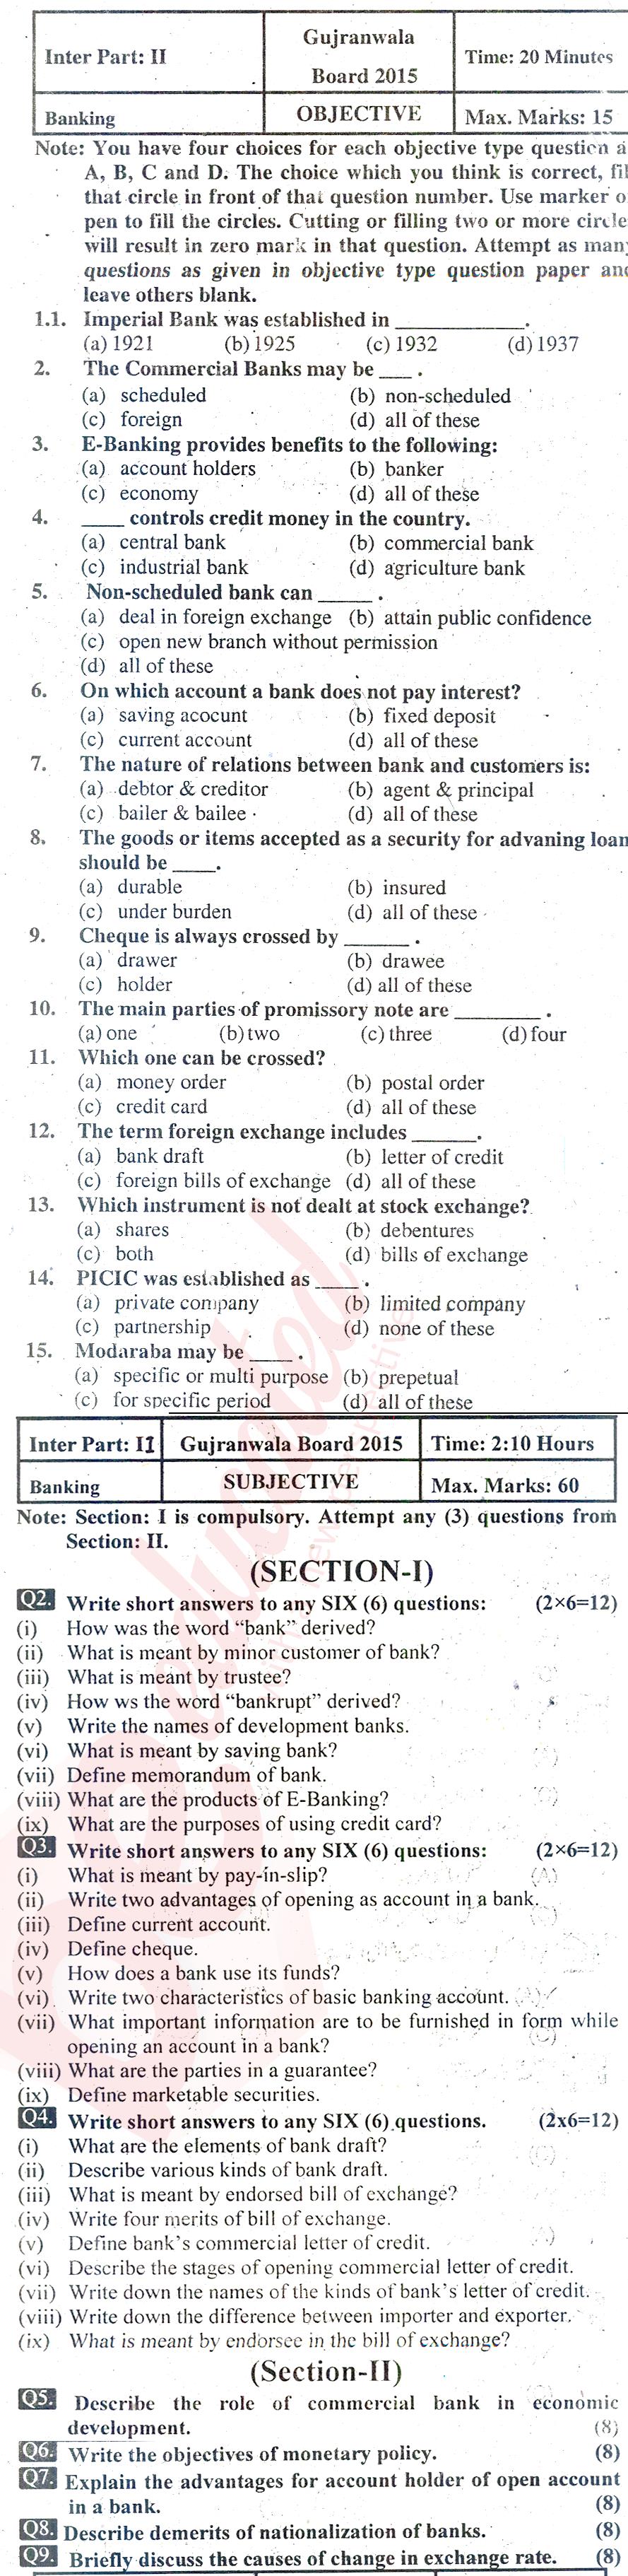 Principles of Banking ICOM Part 2 Past Paper Group 1 BISE Gujranwala 2015